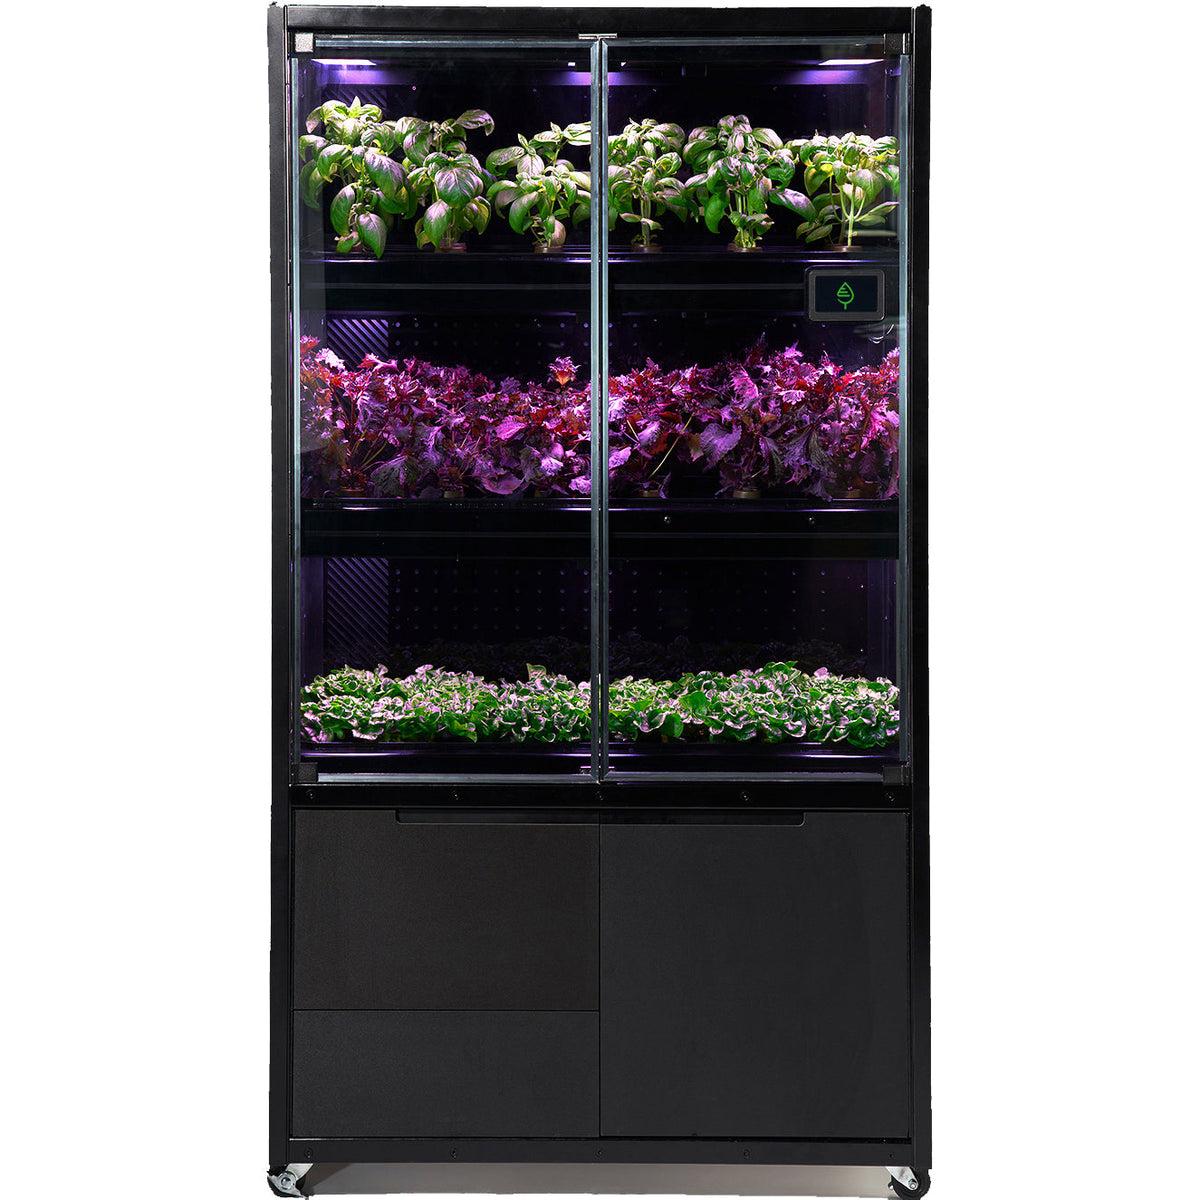 Image for Farmshelf Pre-Order Deposit* | Indoor/Vertical Smart Garden | Home Hydroponic Herb Gardening | Indoor Farming and Growing System | Plant Grow Shelf | Best LED Grow Light | Farmshelf